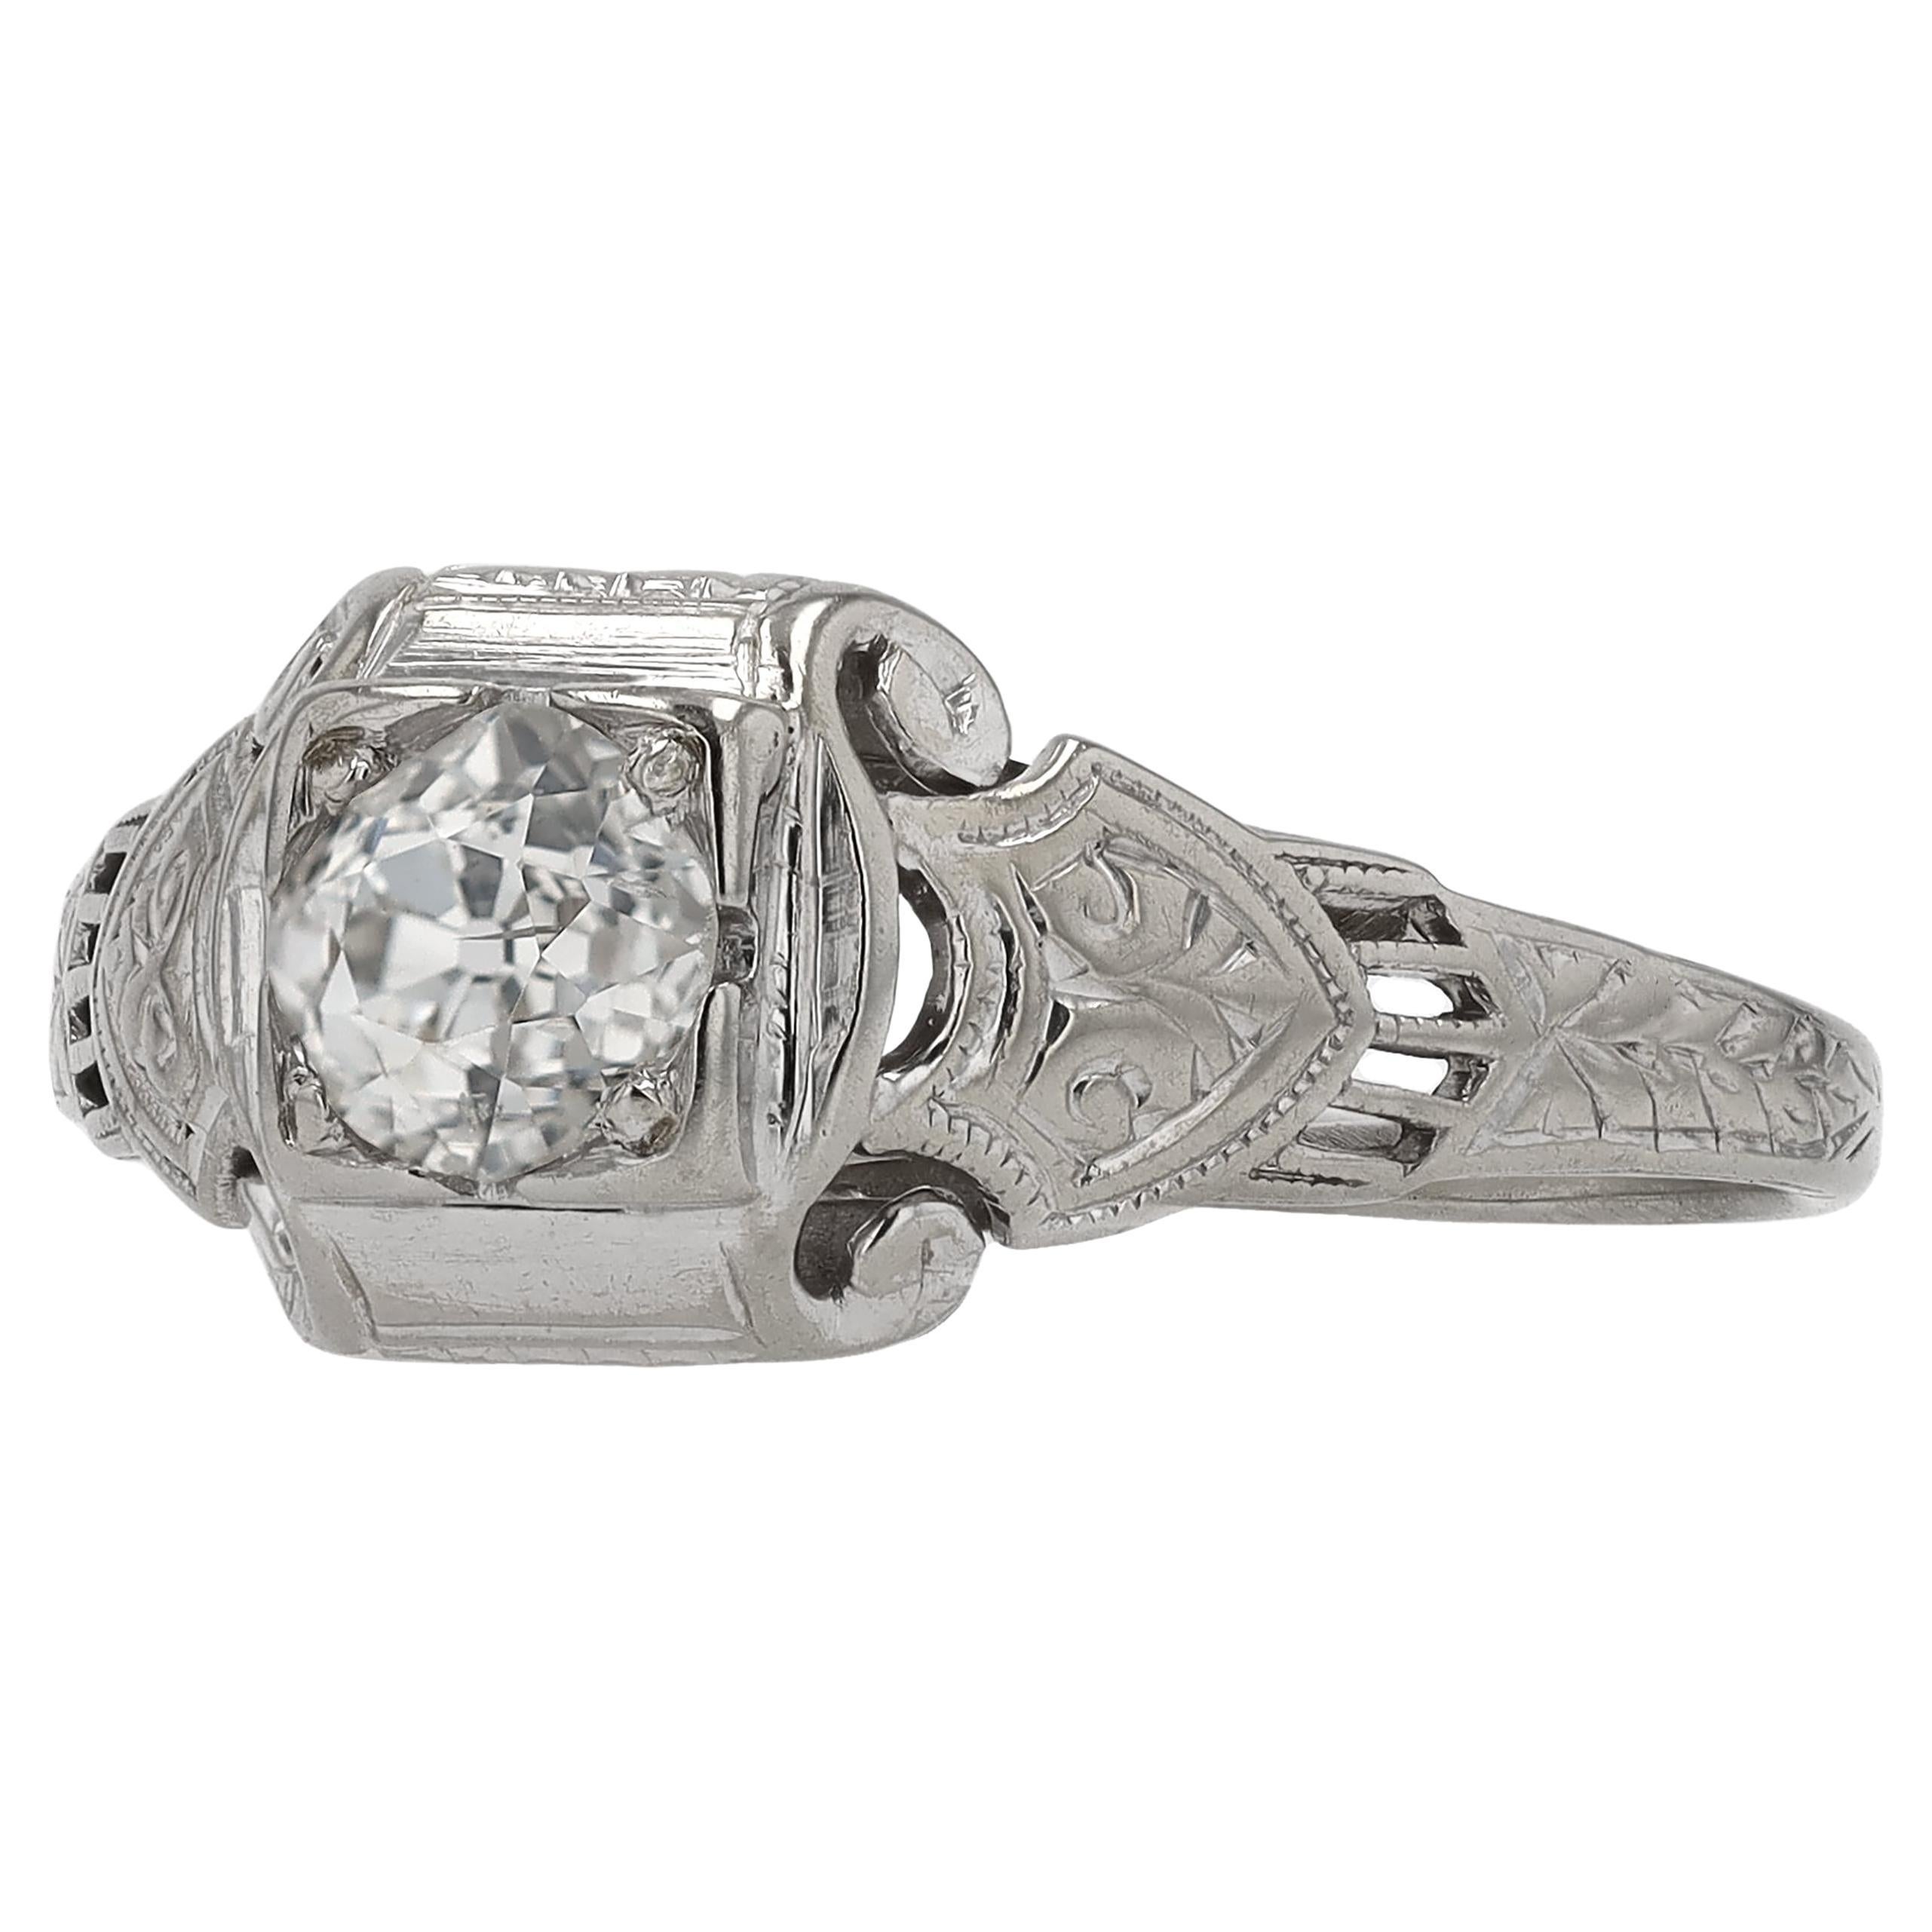 Art Deco Diamond White Gold Filigree Vintage Engagement Ring